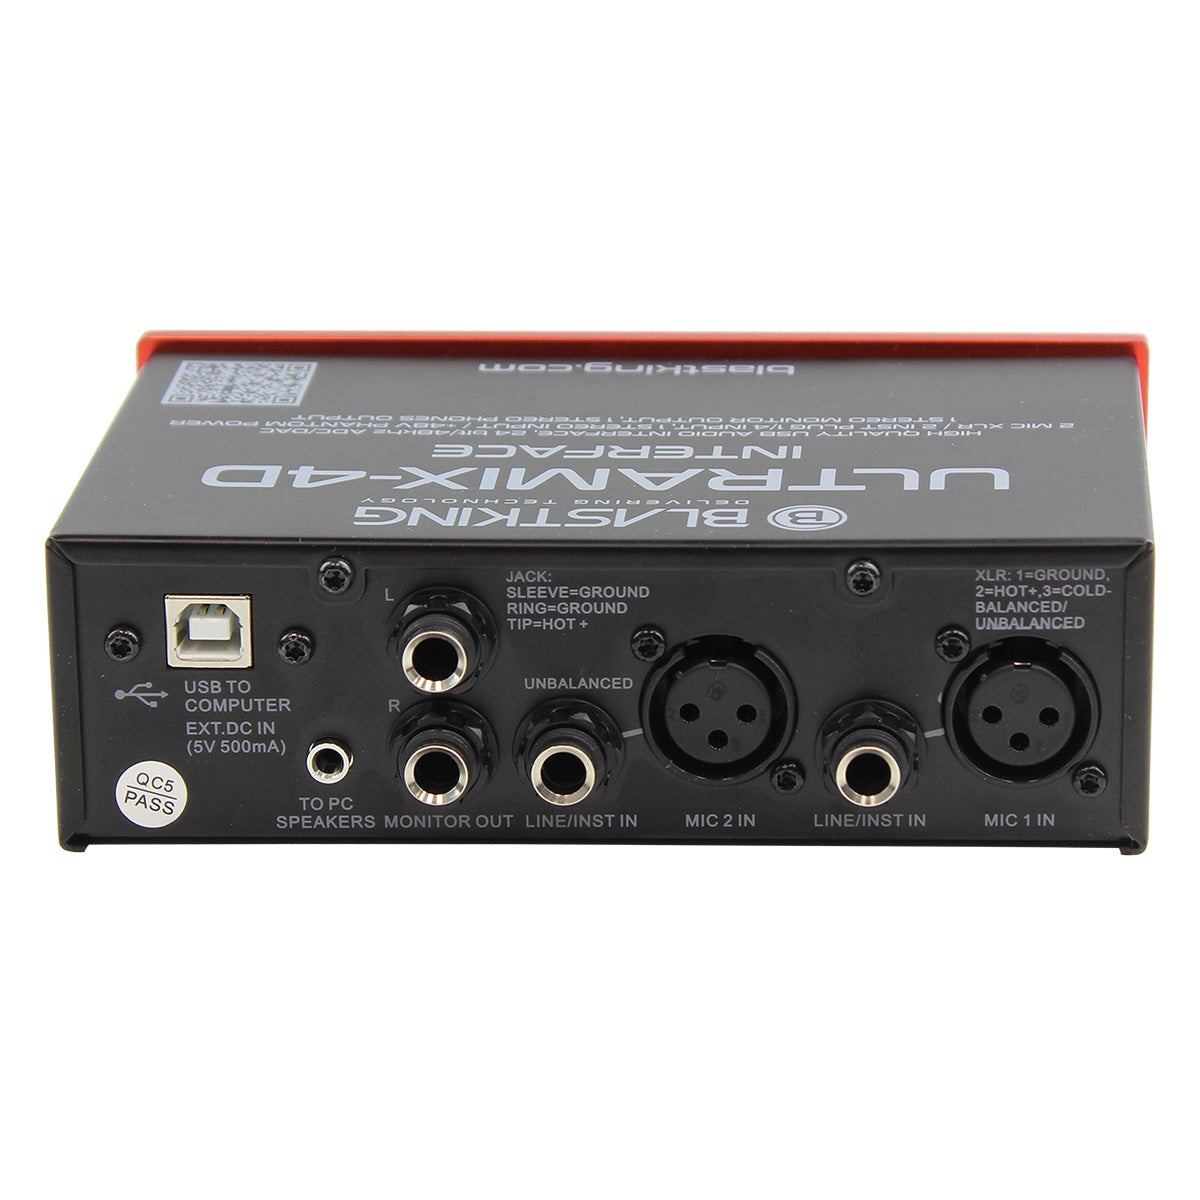 Blastking USB Audio Interface 24-bit/48 KHz XLR 1/4″ +48V Phantom – ULTRAMIX-4D